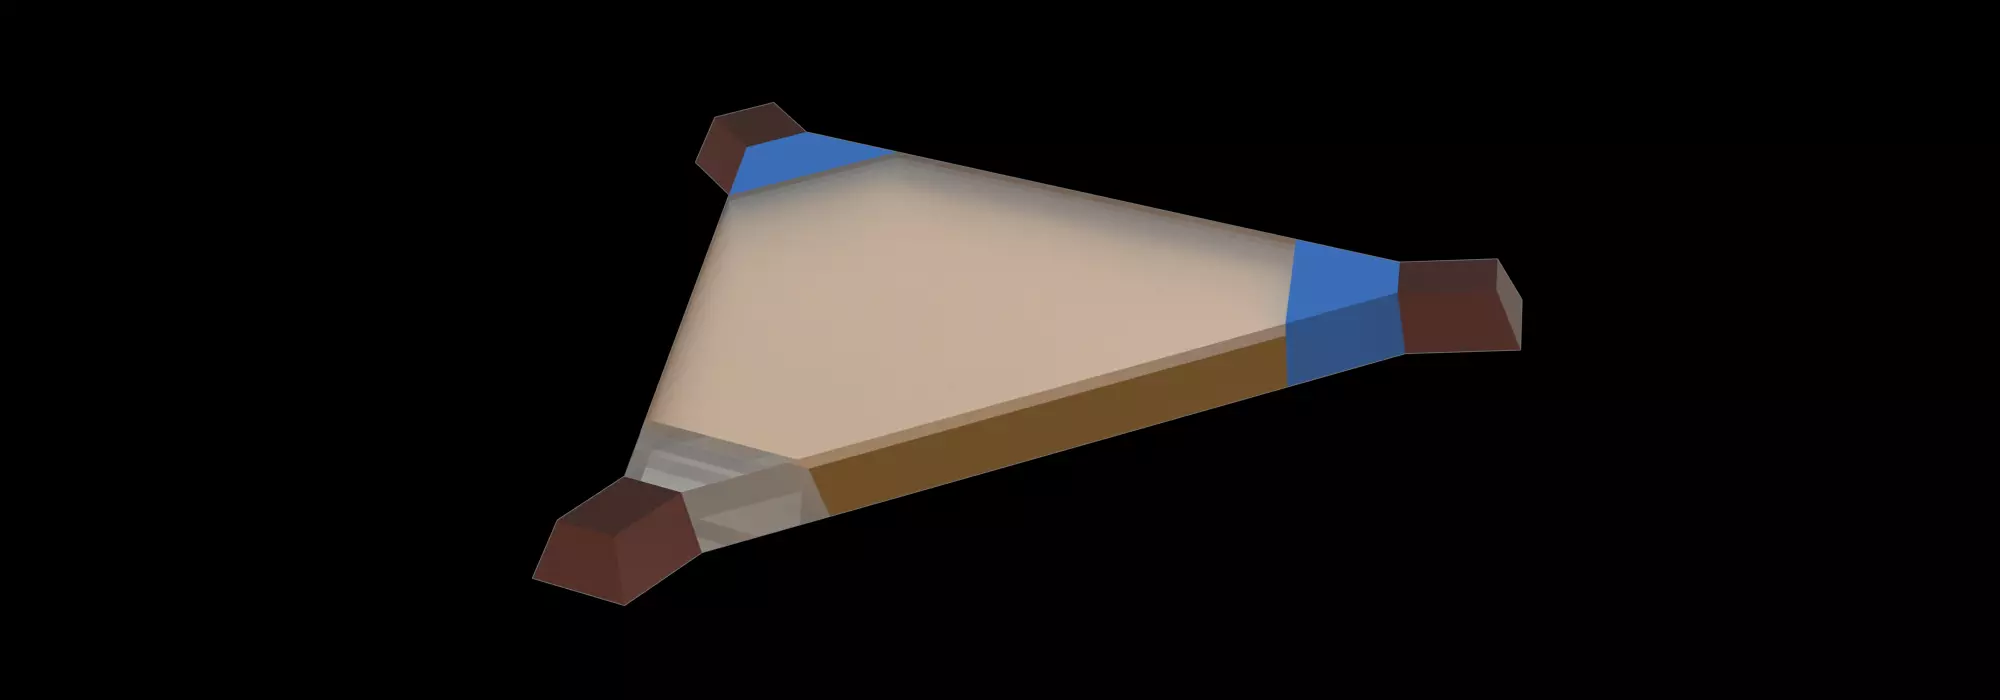 3D printed transistor triangular shape